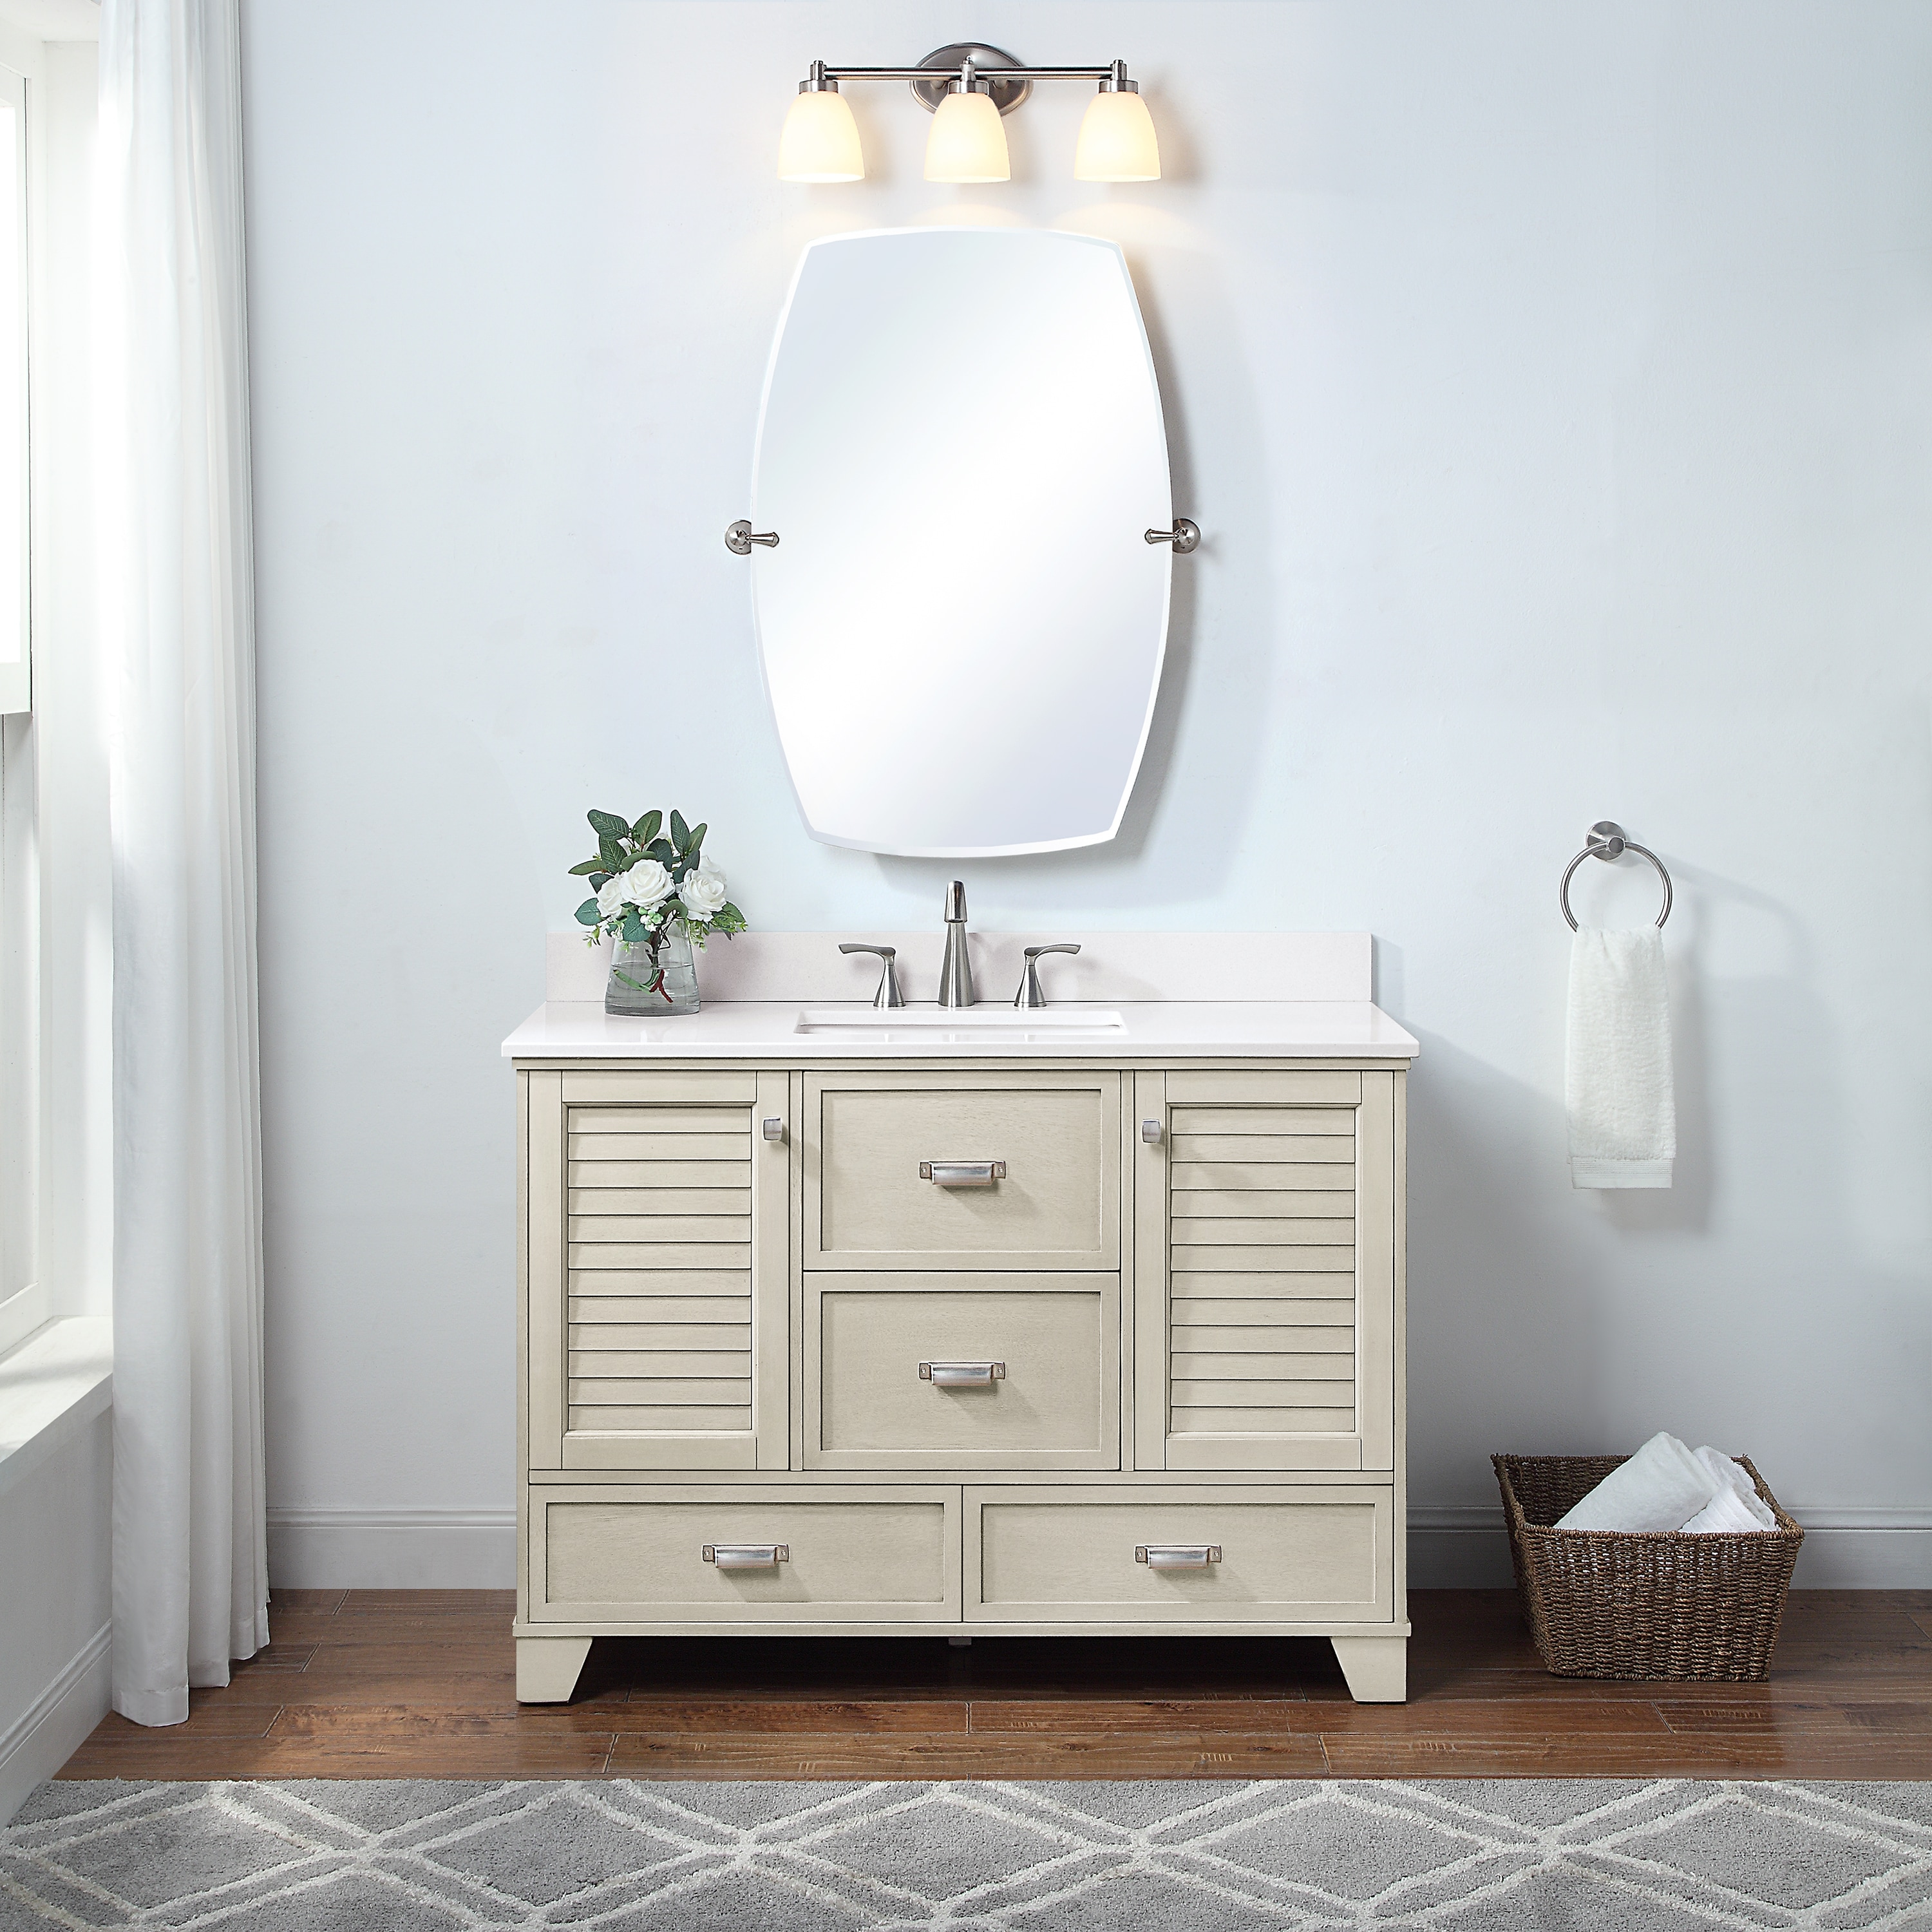 Undermount Single Sink Bathroom Vanity, Cream Colored Bathroom Vanity